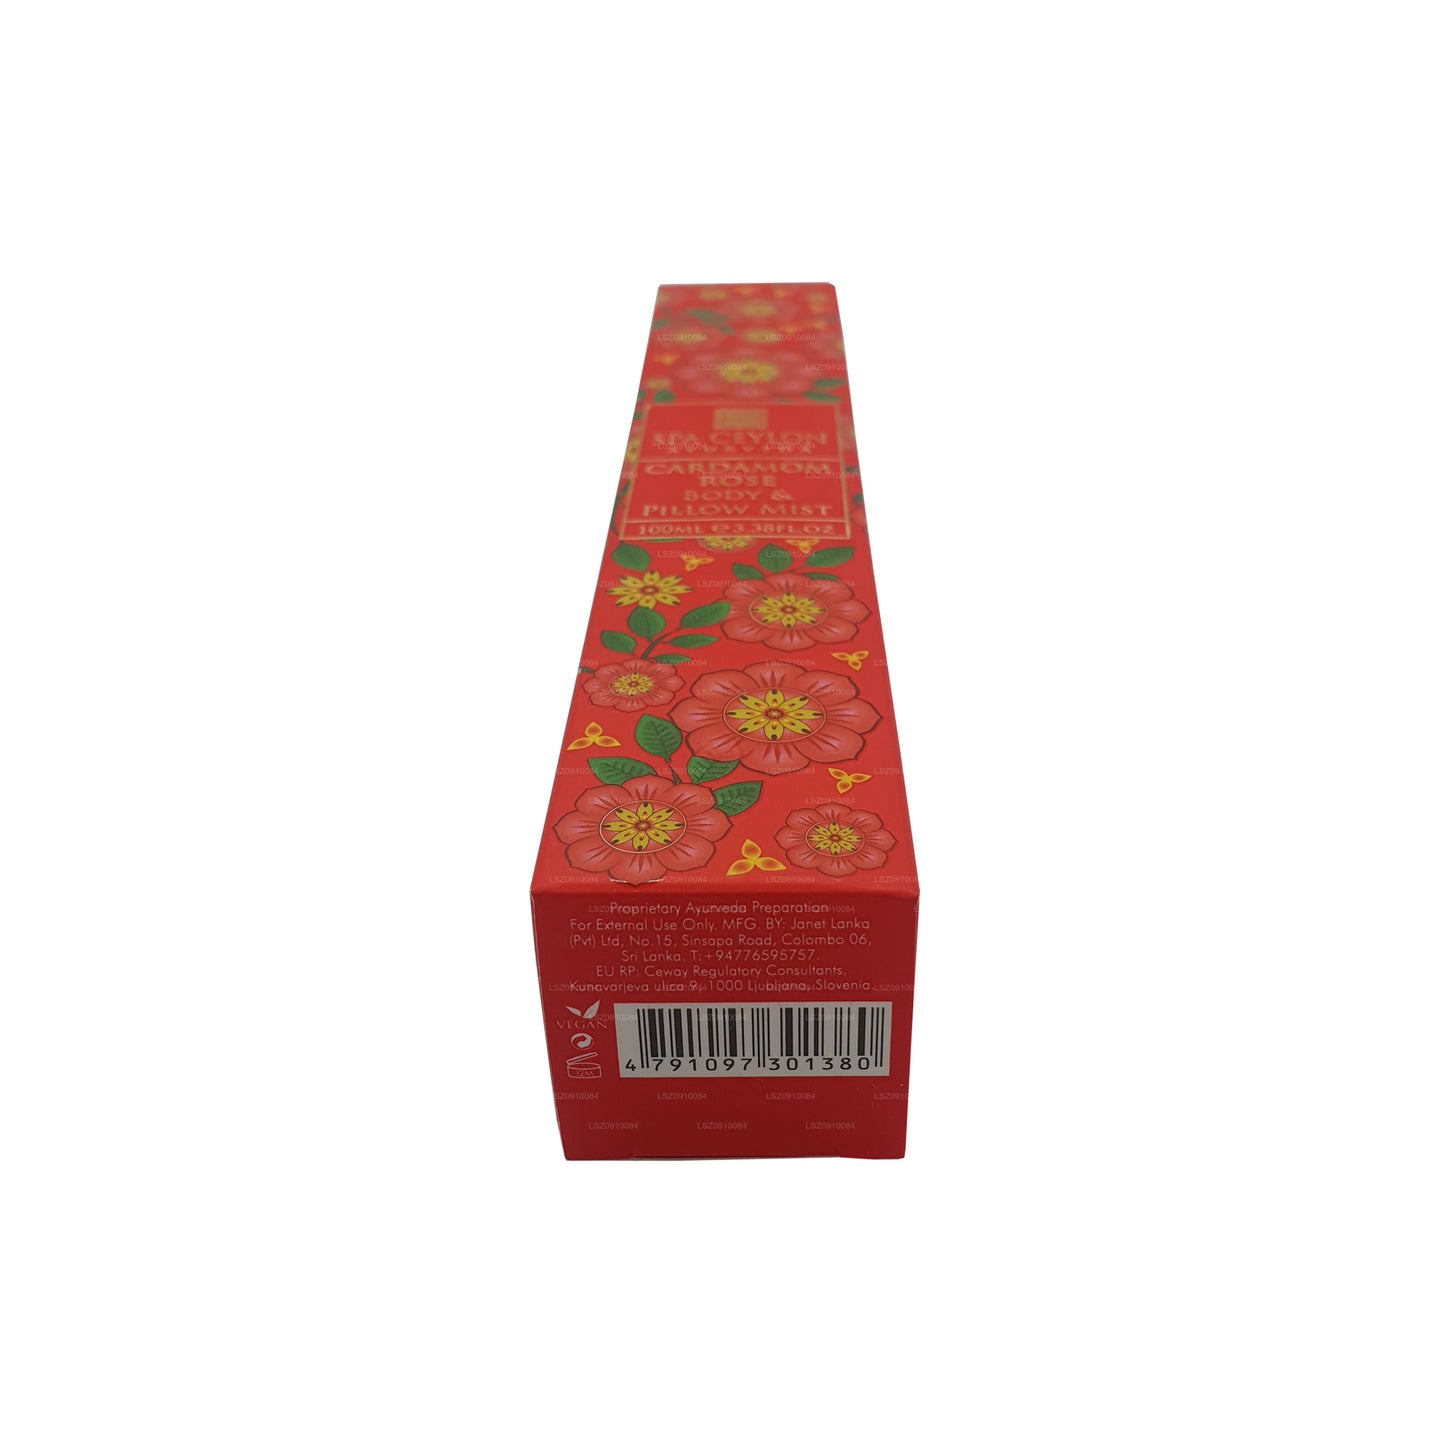 Spa Ceylon Cardamom Rose lichaams- en kussenspray (100 ml)